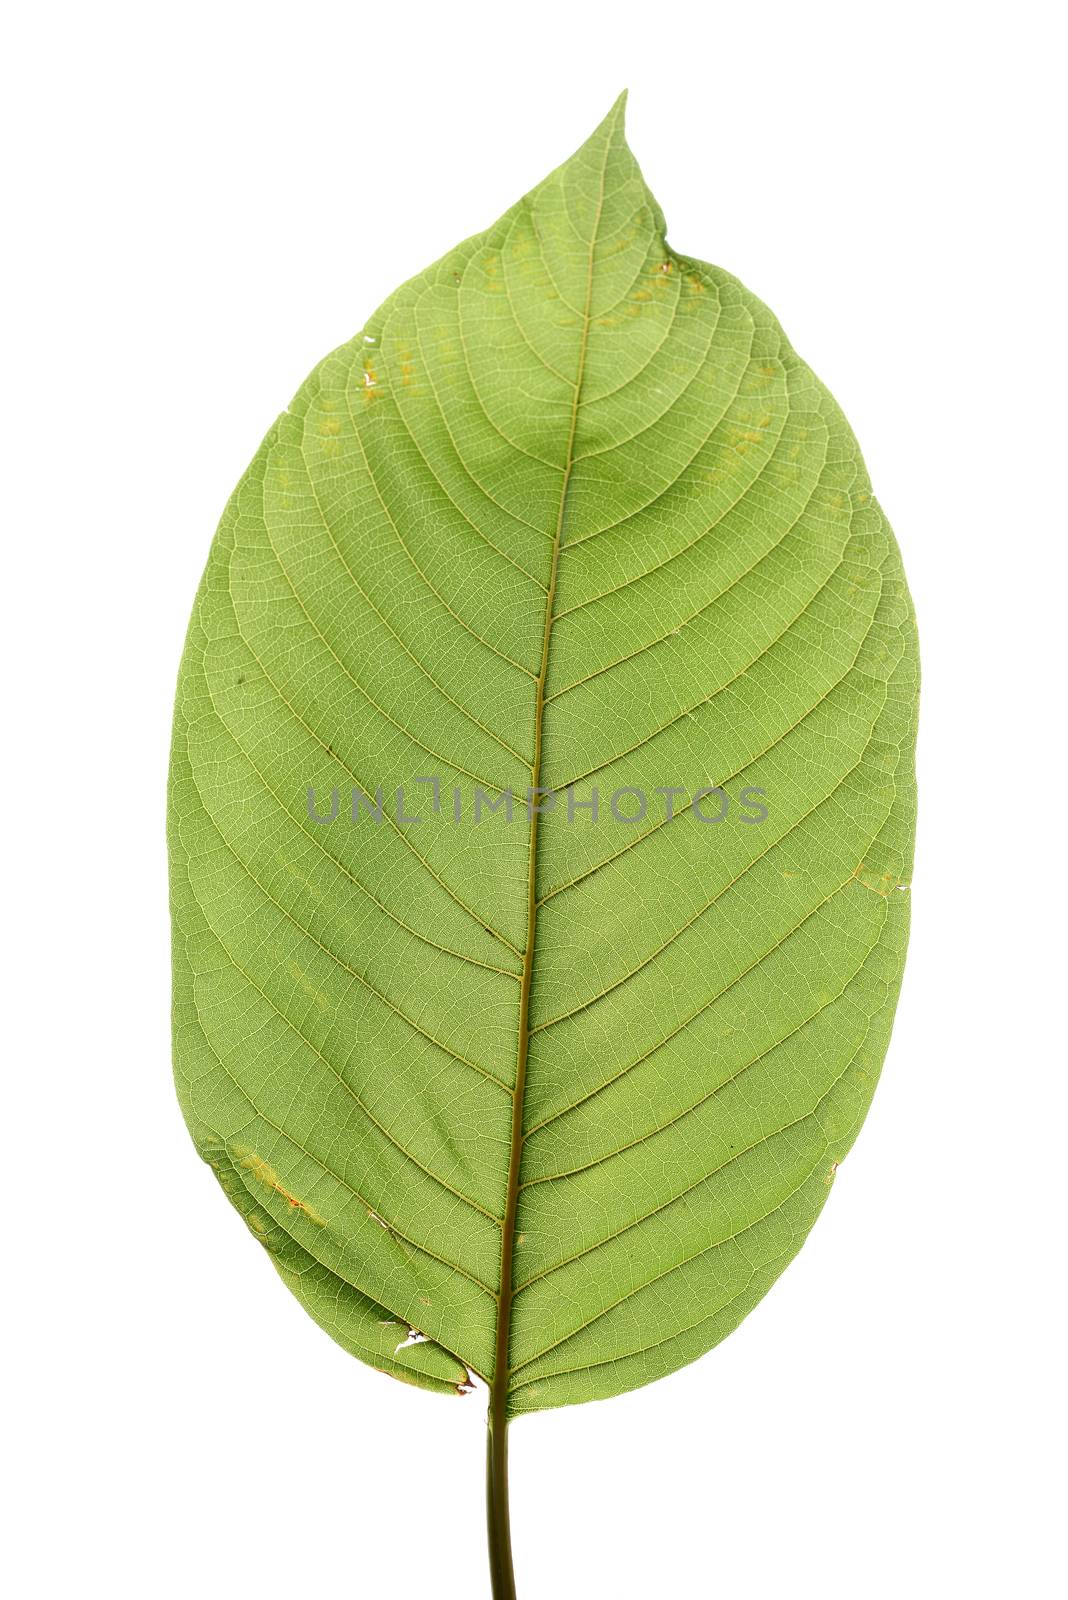 mitragyna speciosa, kratom leaf